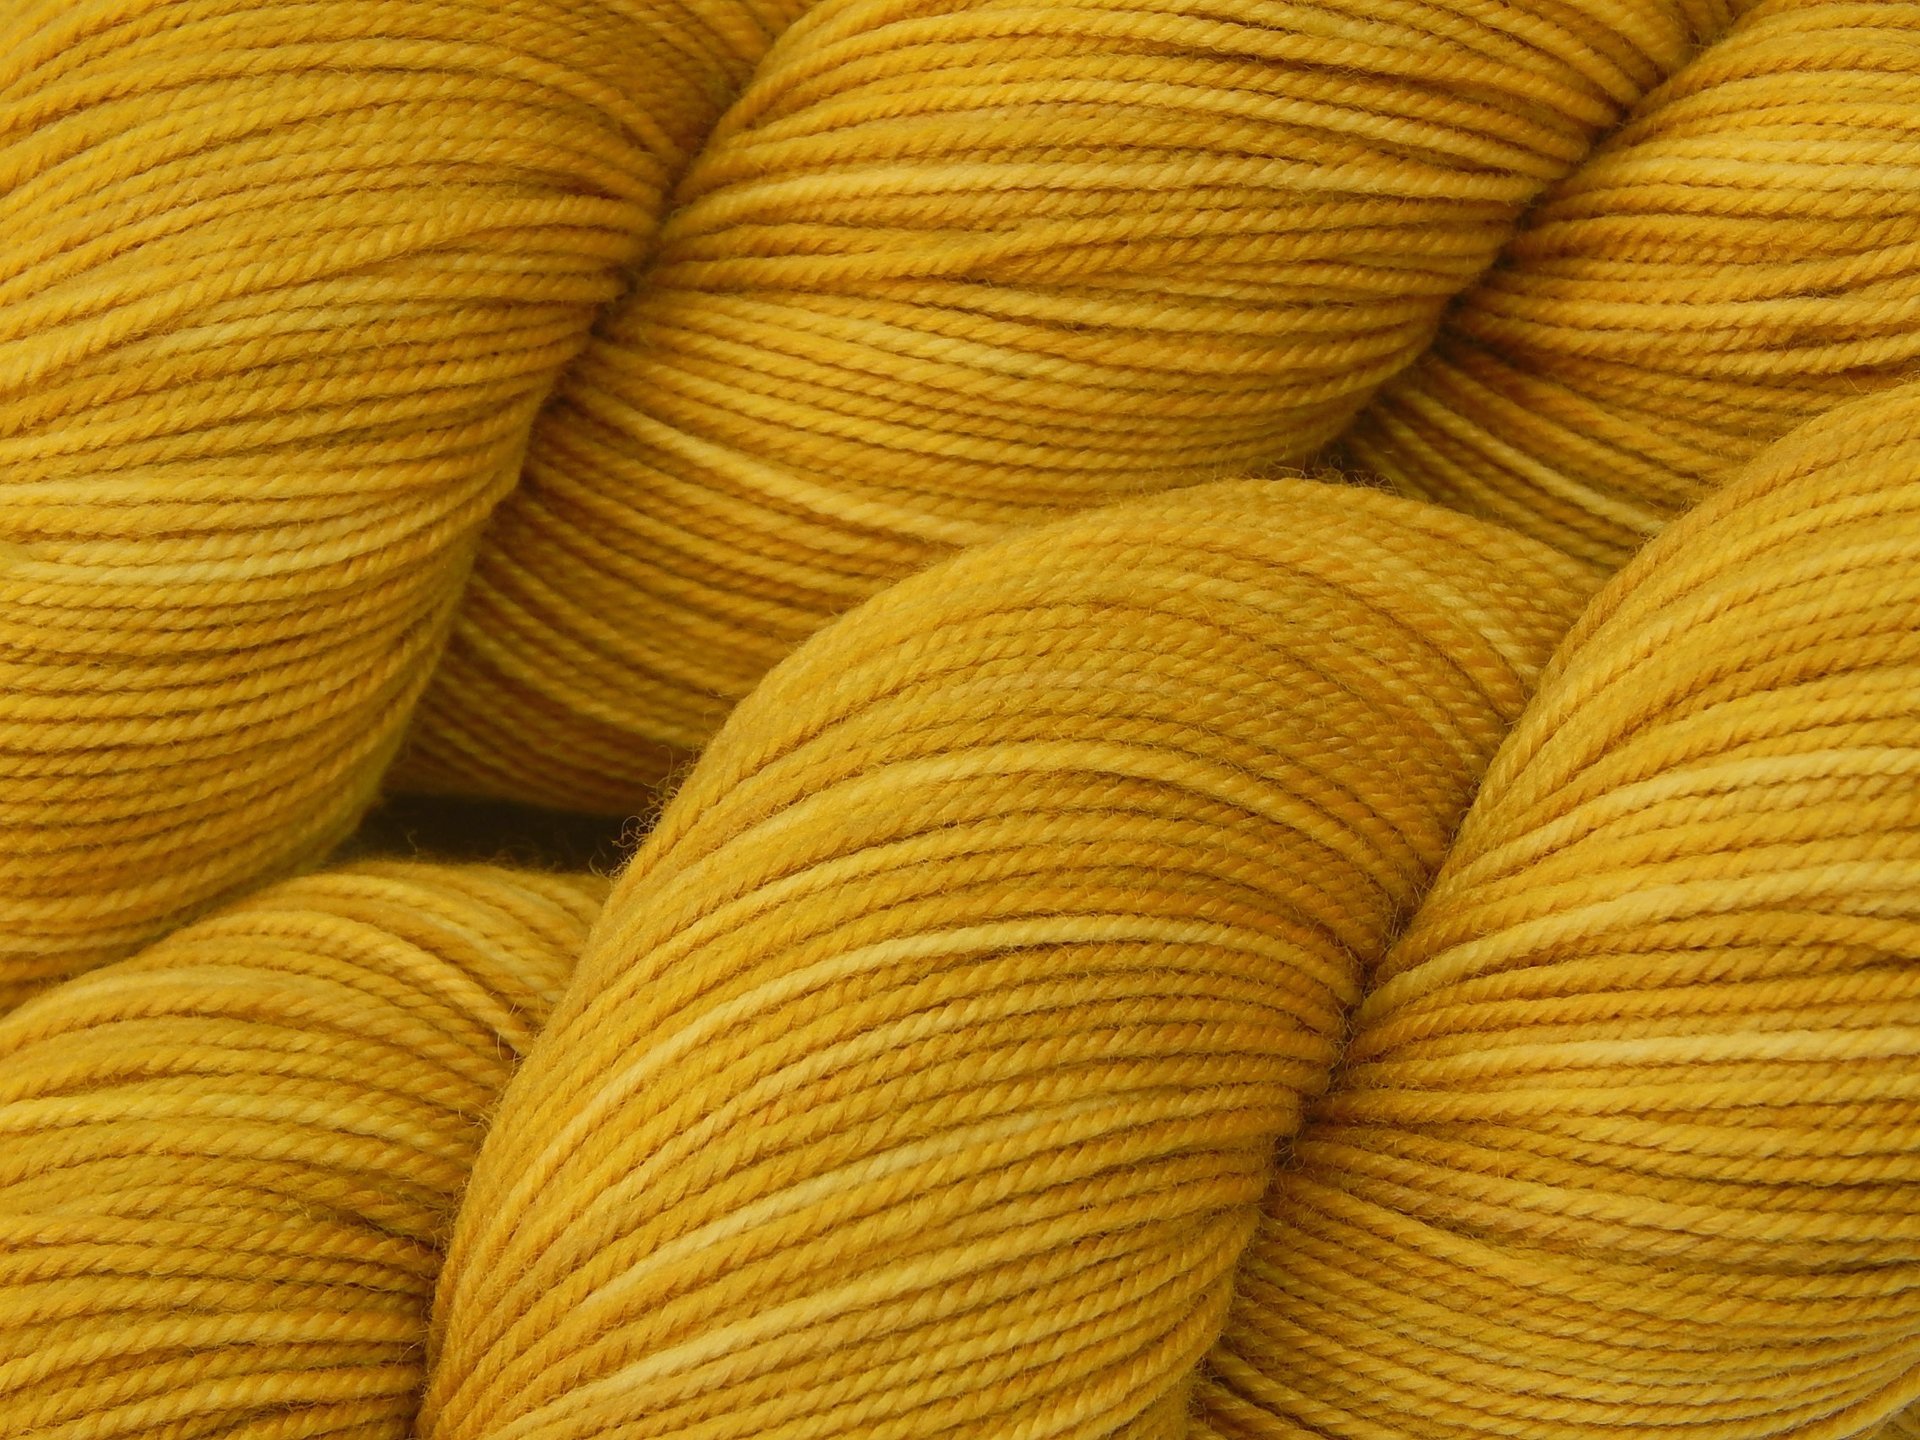 Limited Edition! Hand Dyed Yarn, Light Fingering Weight Superwash Merino Wool & Nylon Blend - Honey Mustard - Indie Dyer Knitting Yarn, Yellow Gold